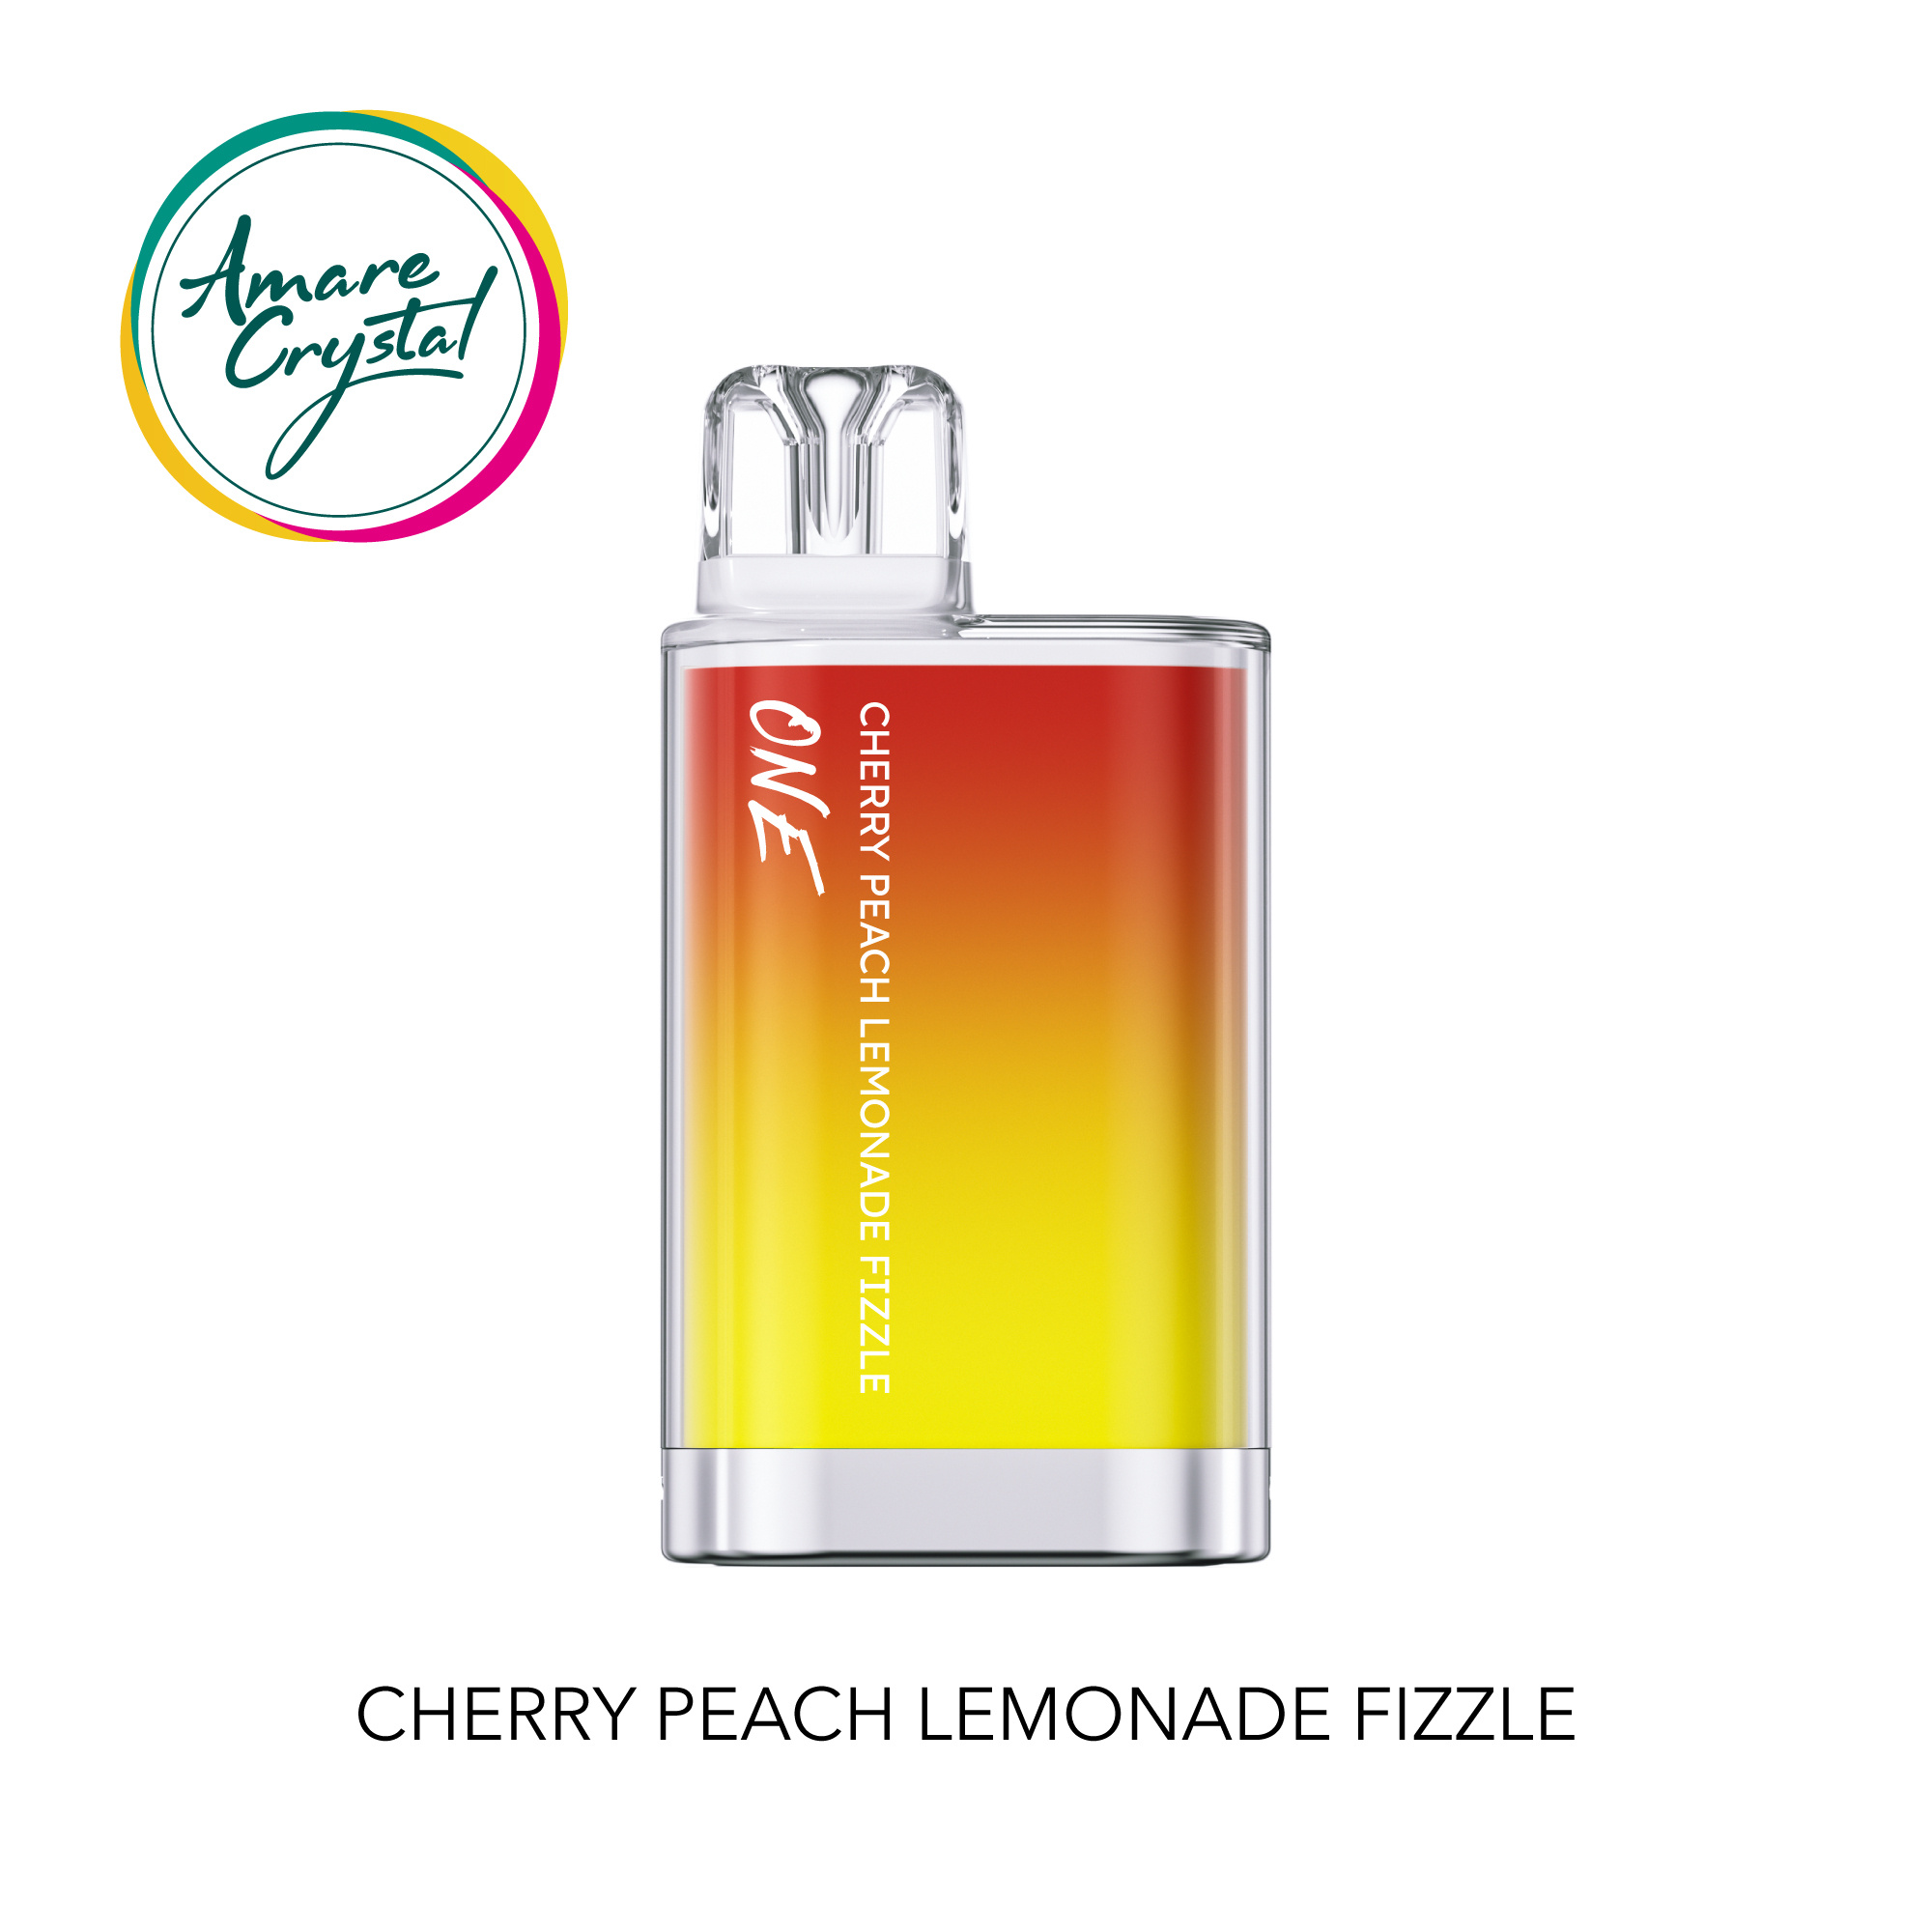 Amare Crystal One - Cherry Peach Lemonade Fizzle